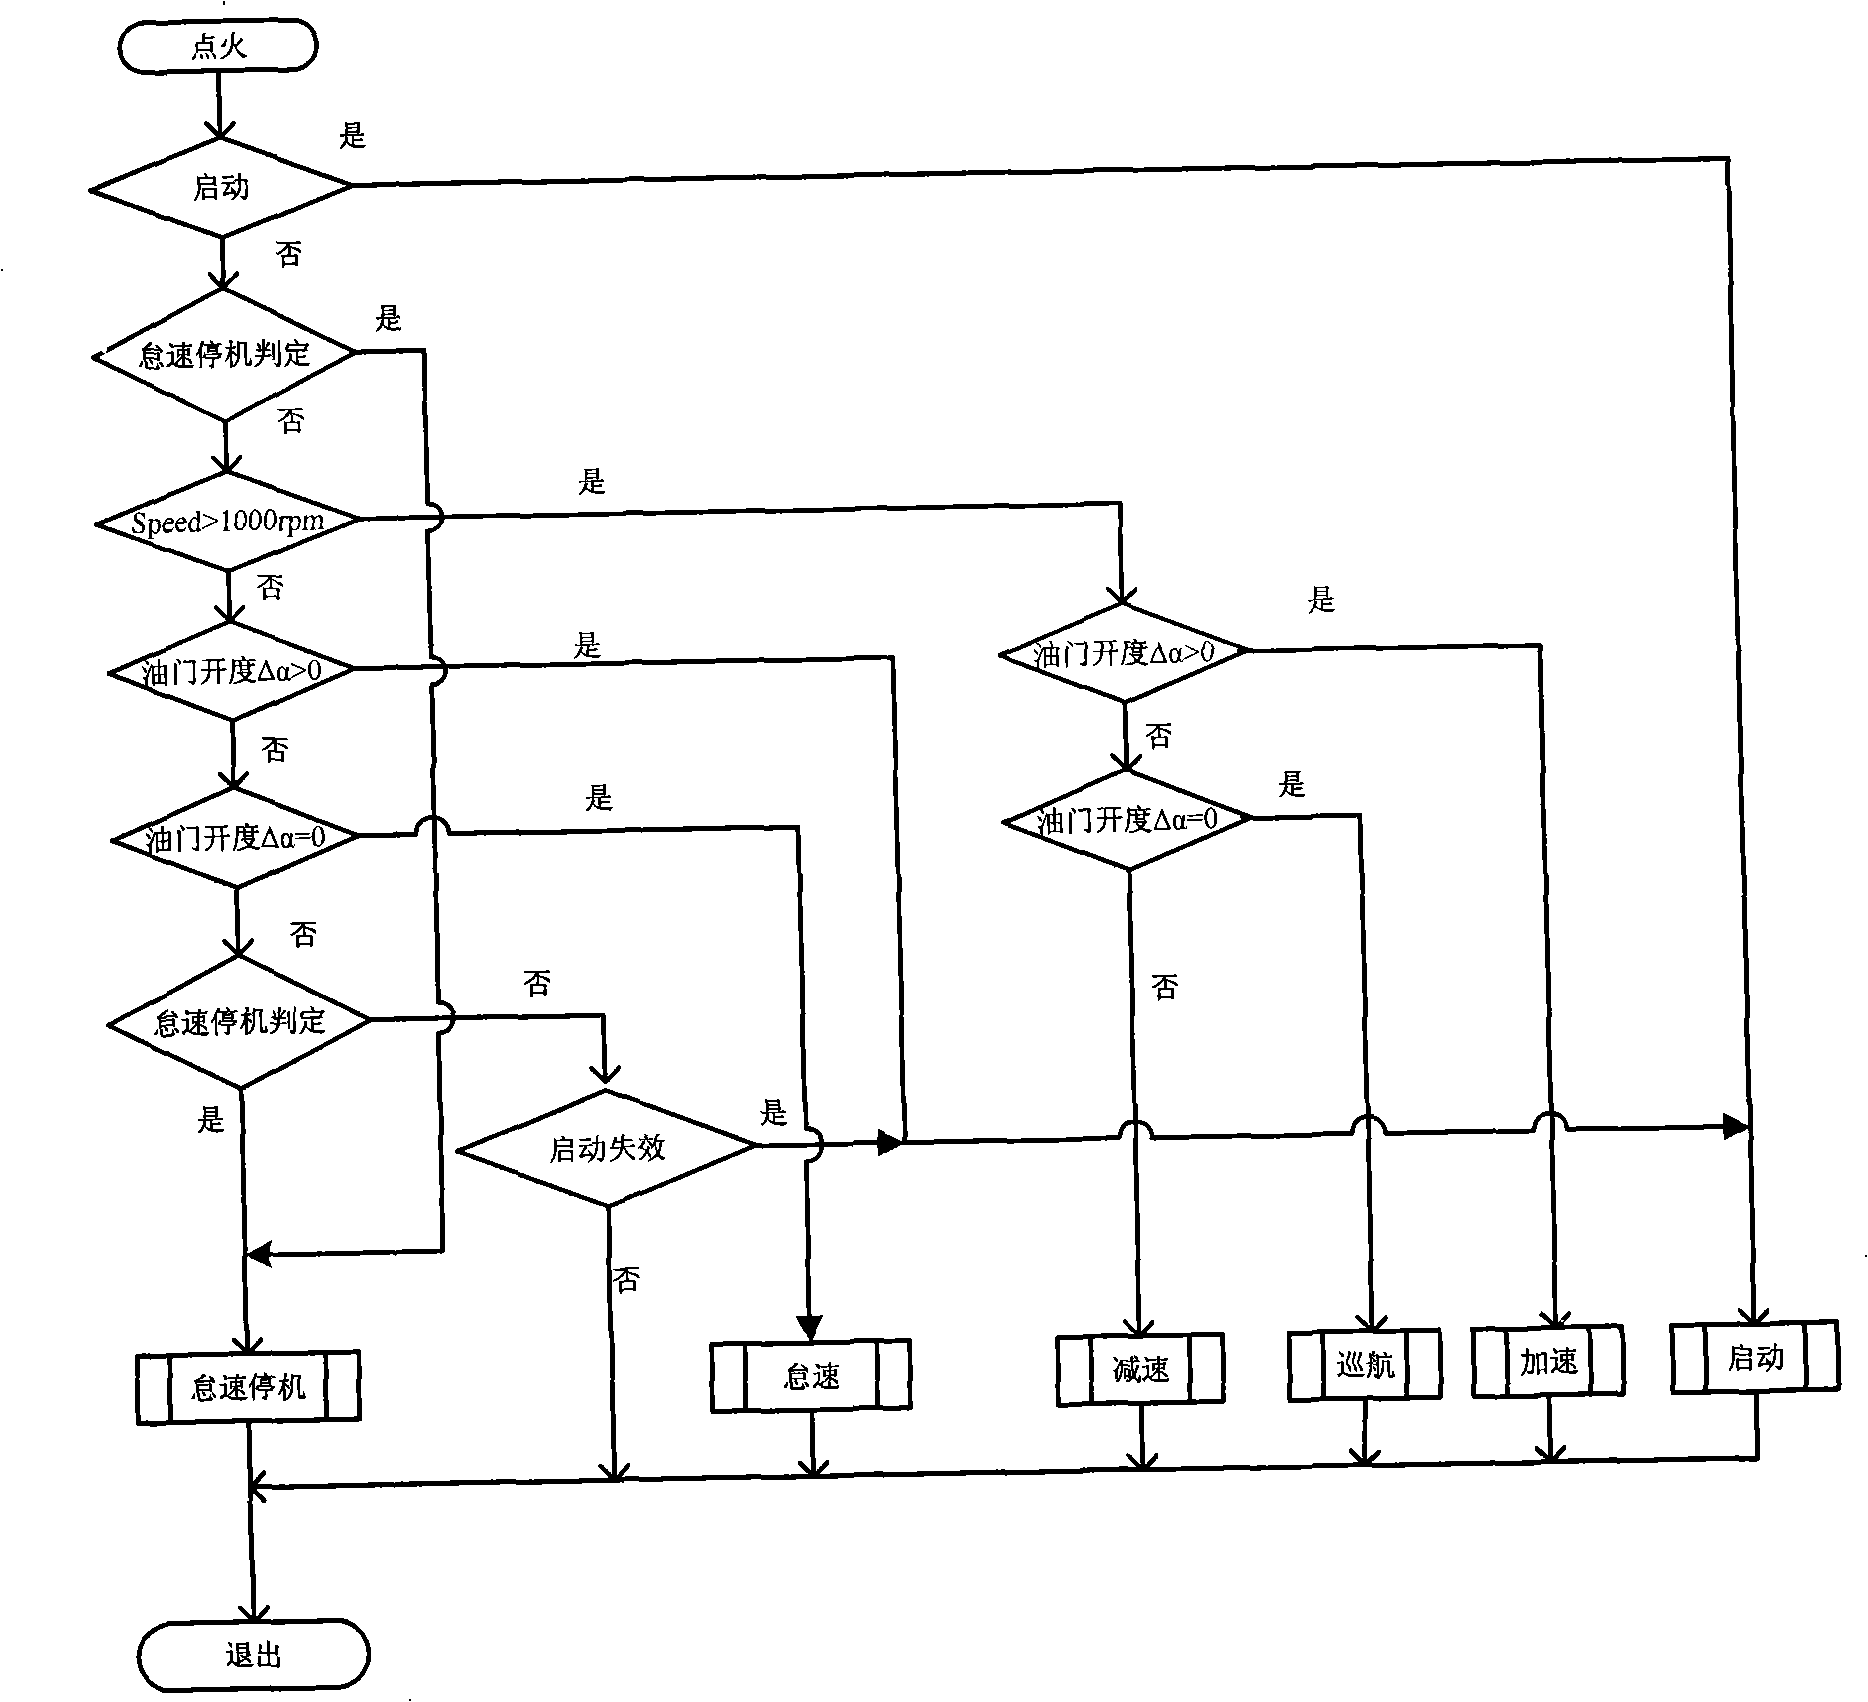 Parallel type hybrid power assembly rack system